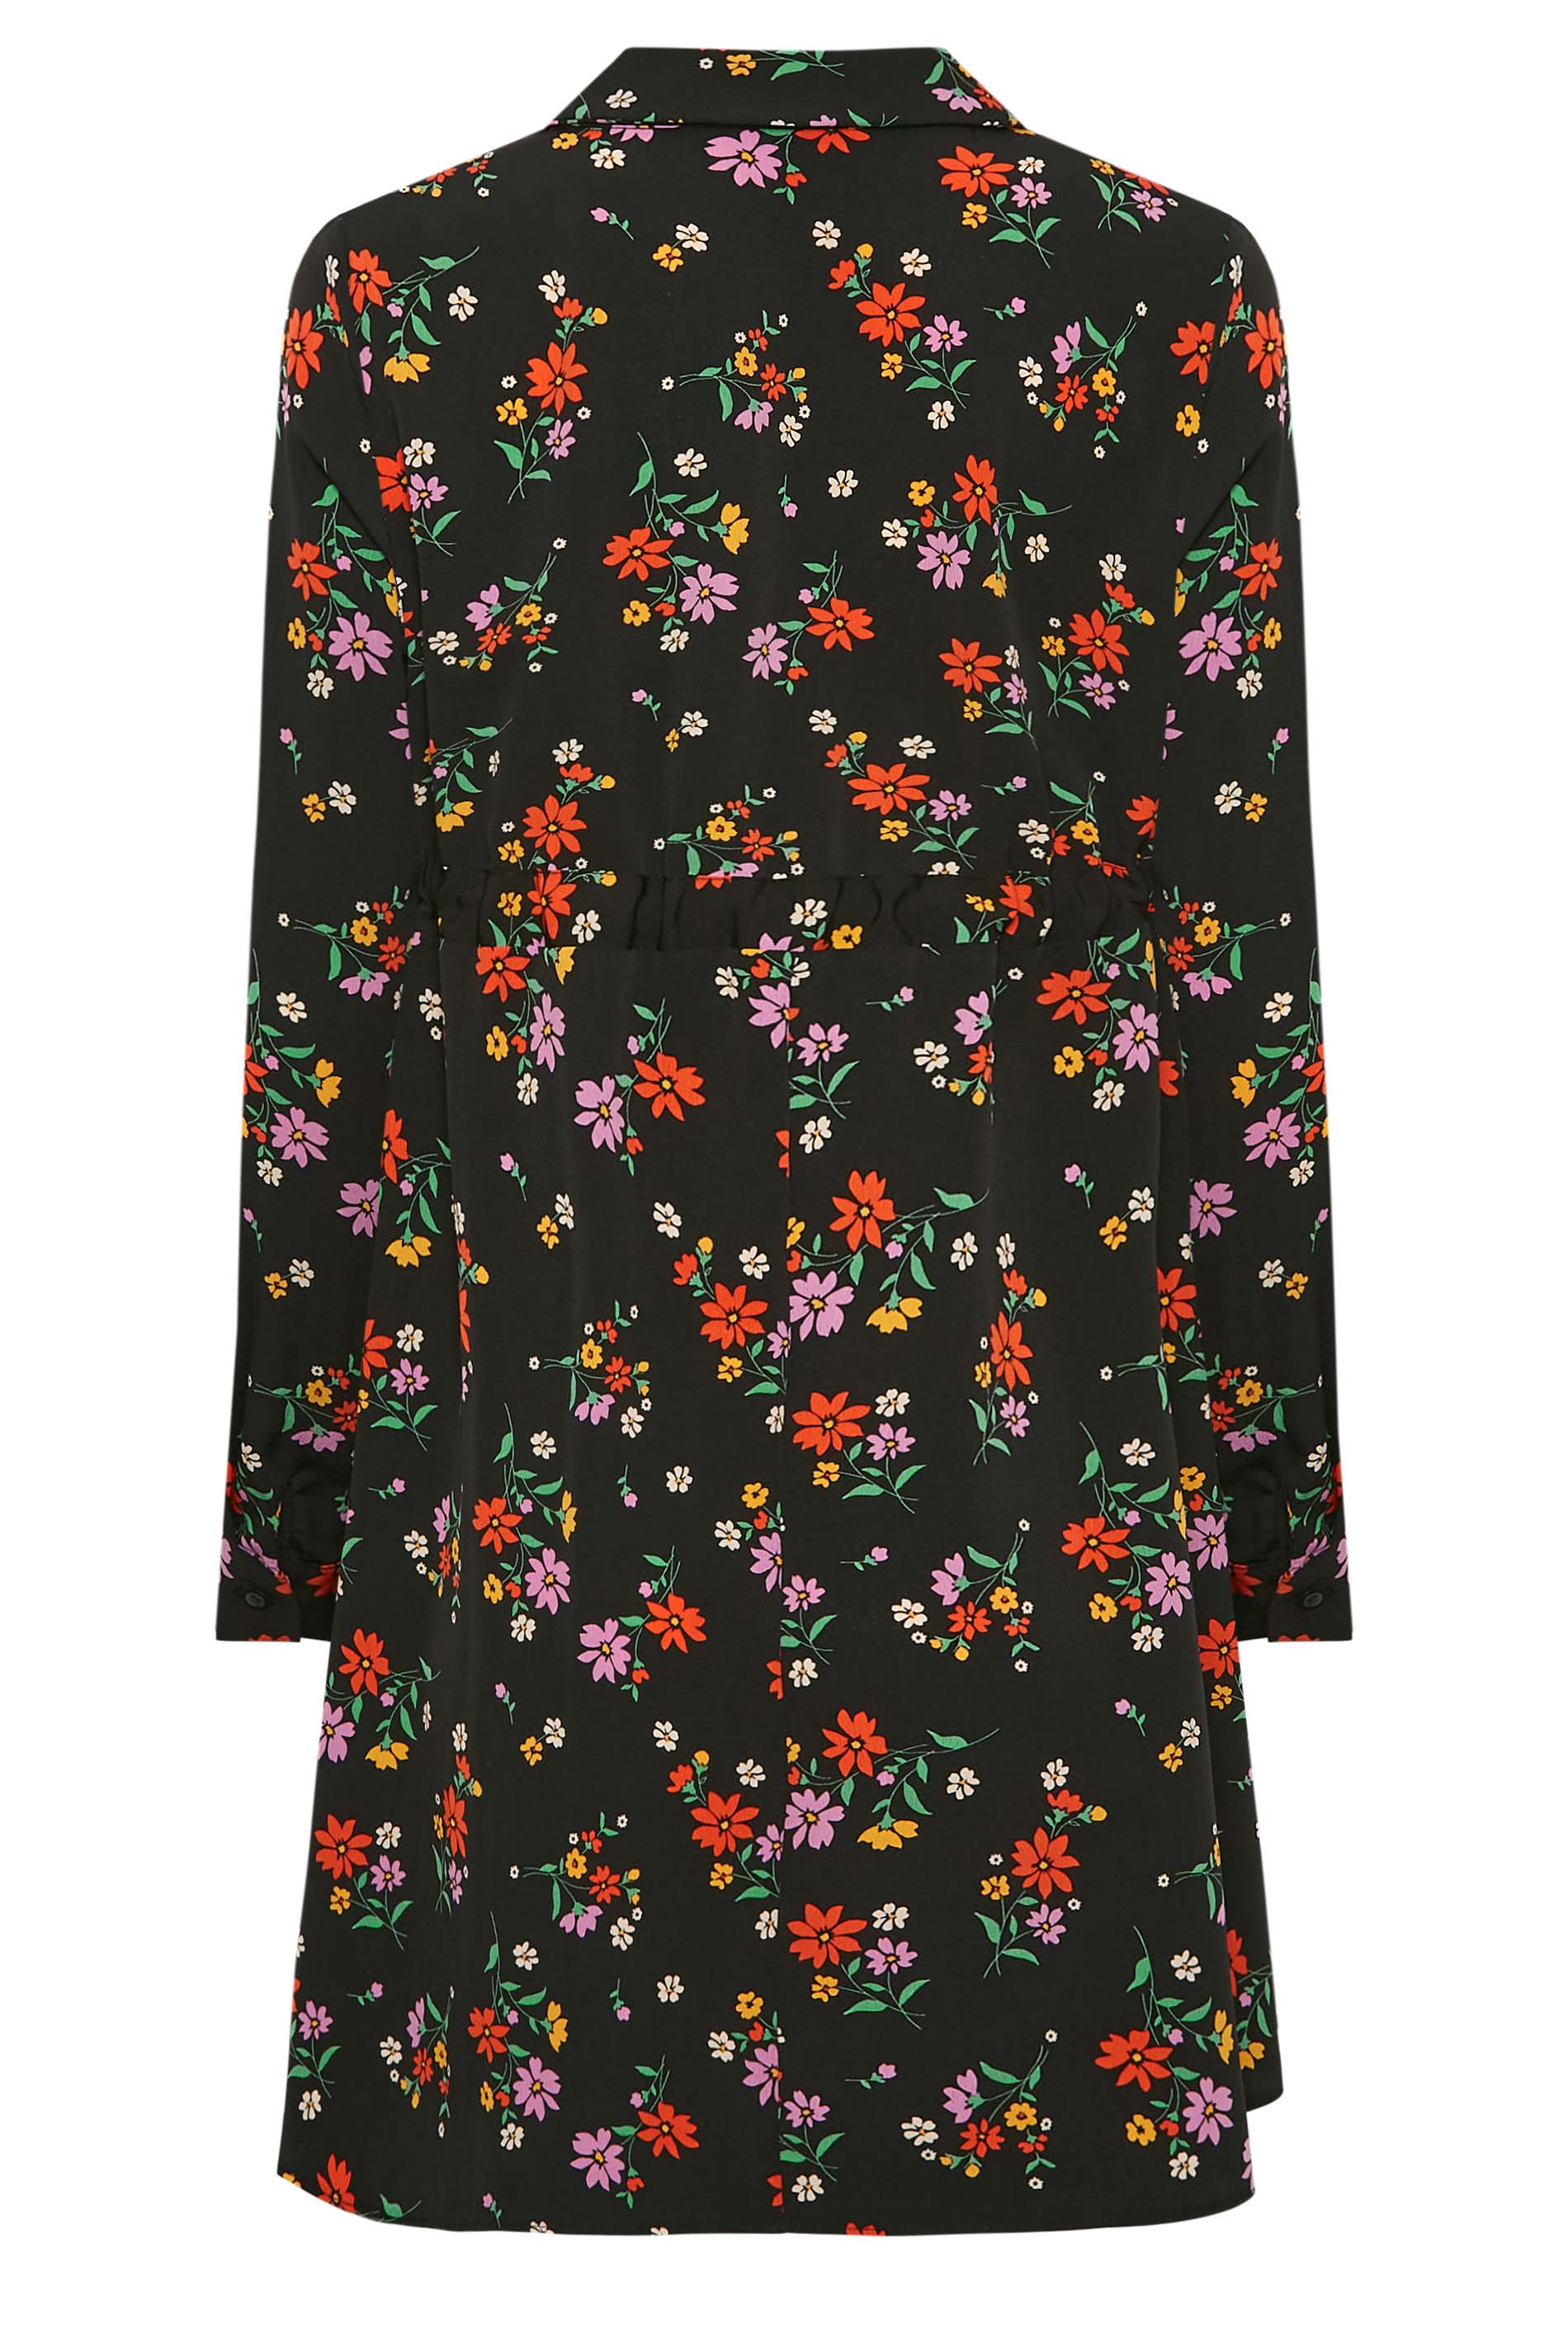 M&Co Black Floral Print Tie Waist Tunic Shirt | M&Co